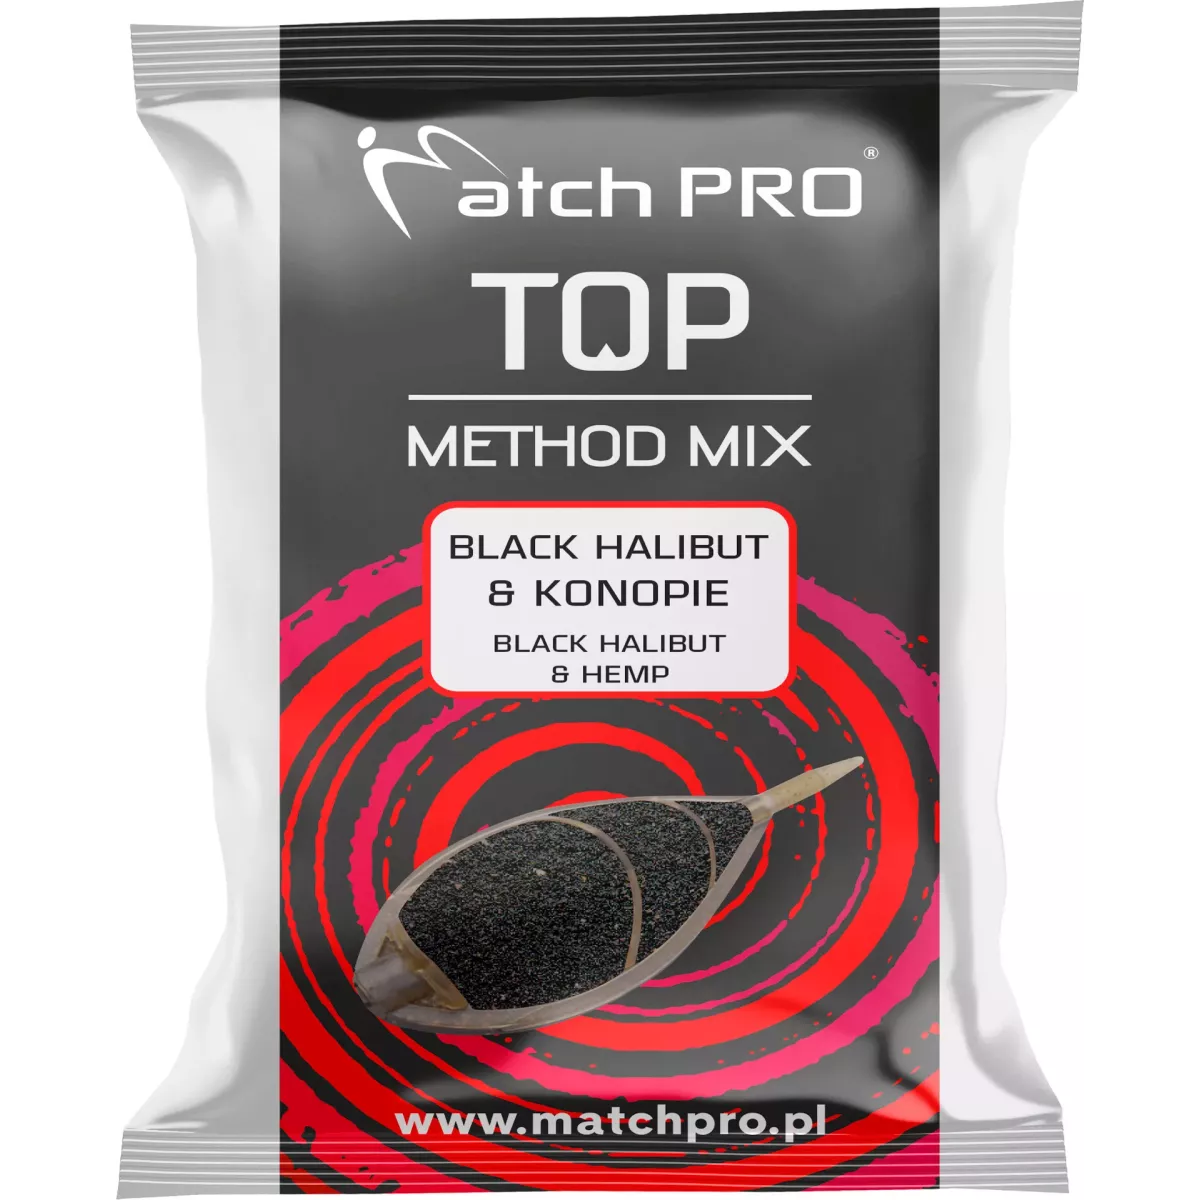 Zanęta MatchPro Method Mix TOP 700g - BLACK HALIBUT & KONOPIE